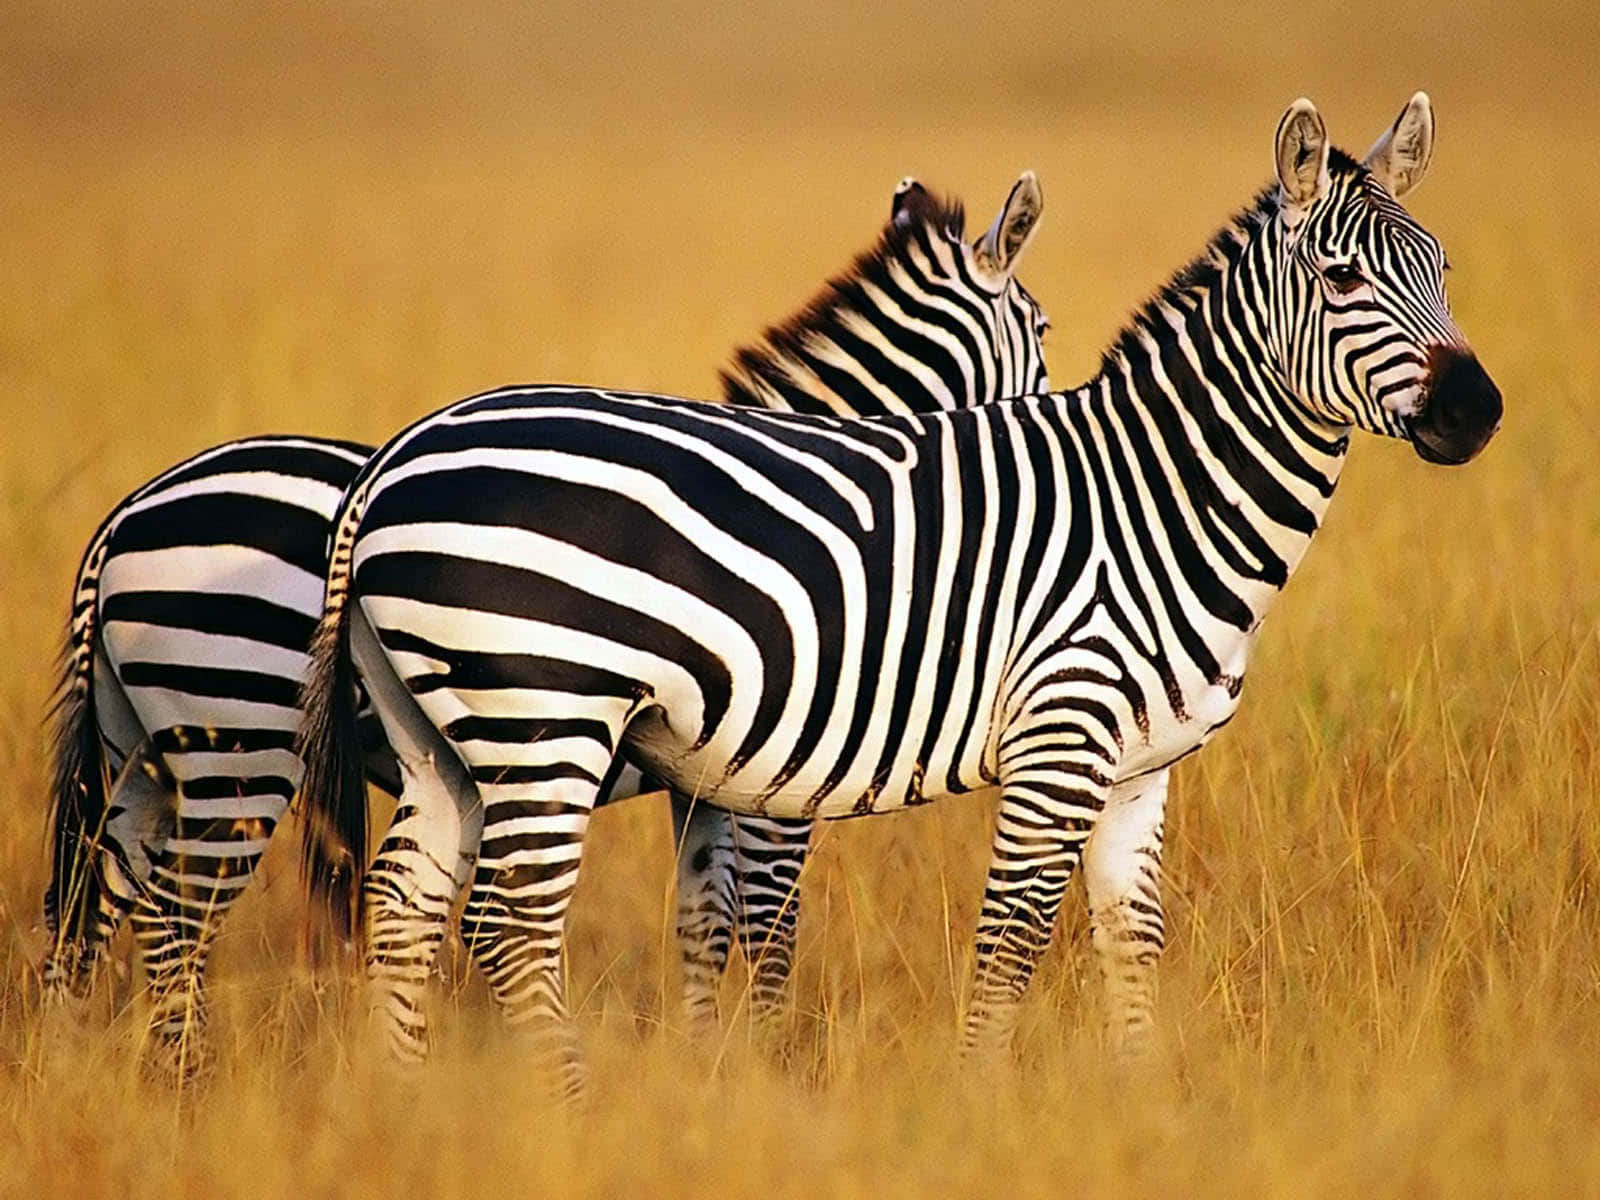 A Herd of Zebras Gathering in the Safari